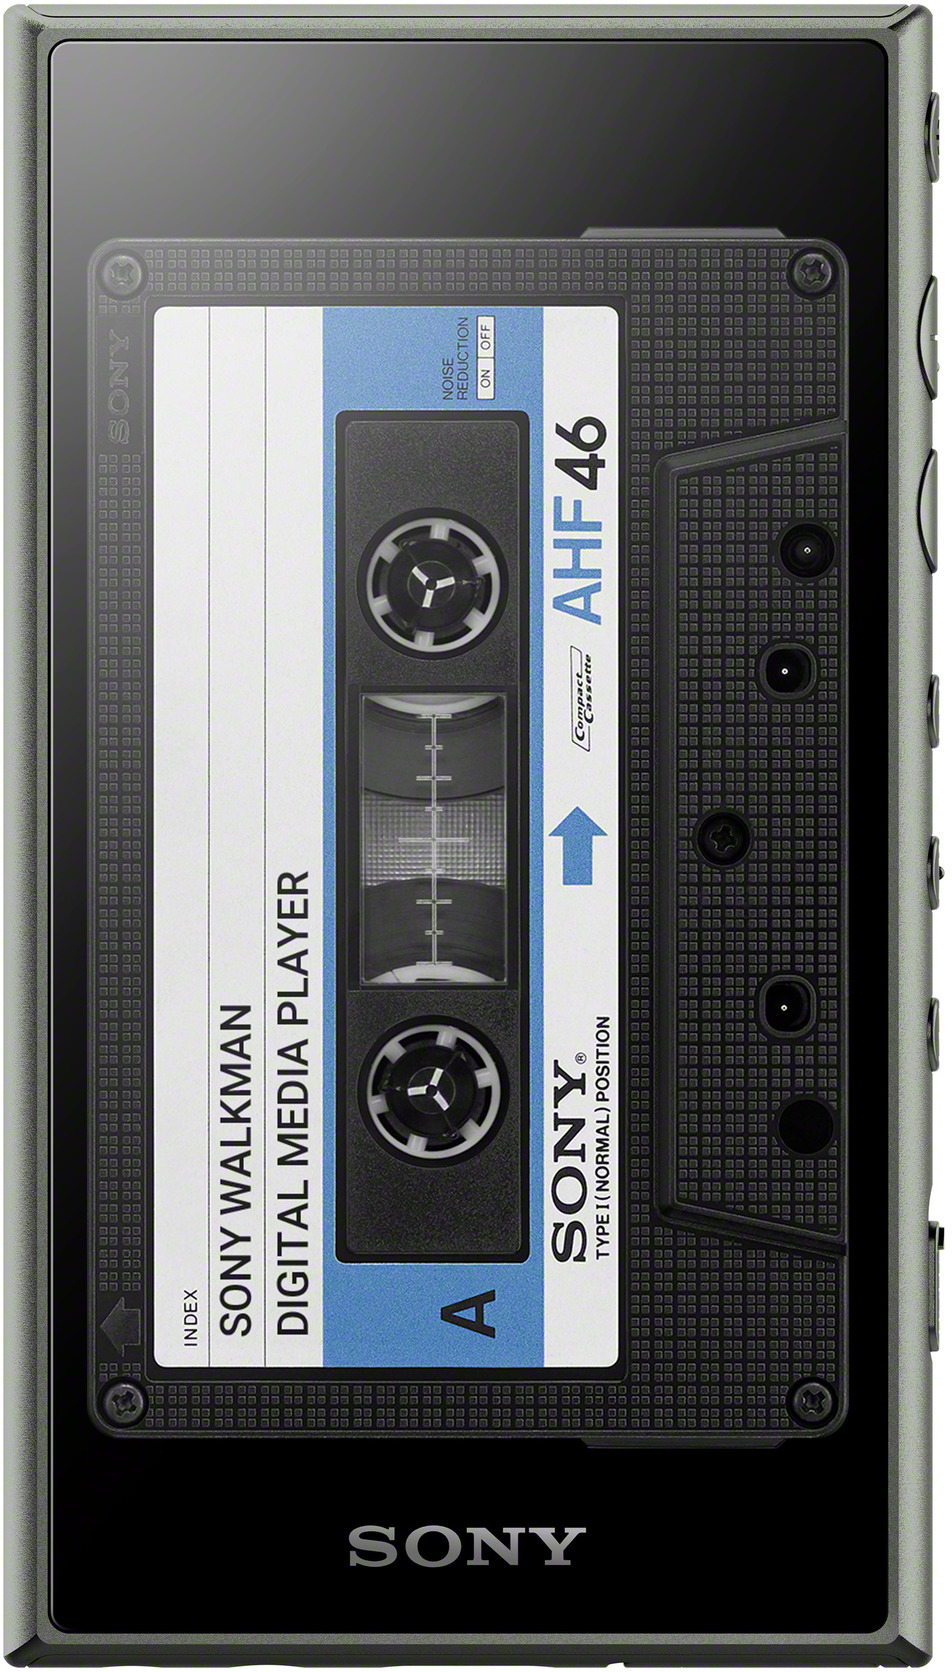 9.0 NW-A105 Android GB, SONY 16 Grün Mp3-Player Walkman